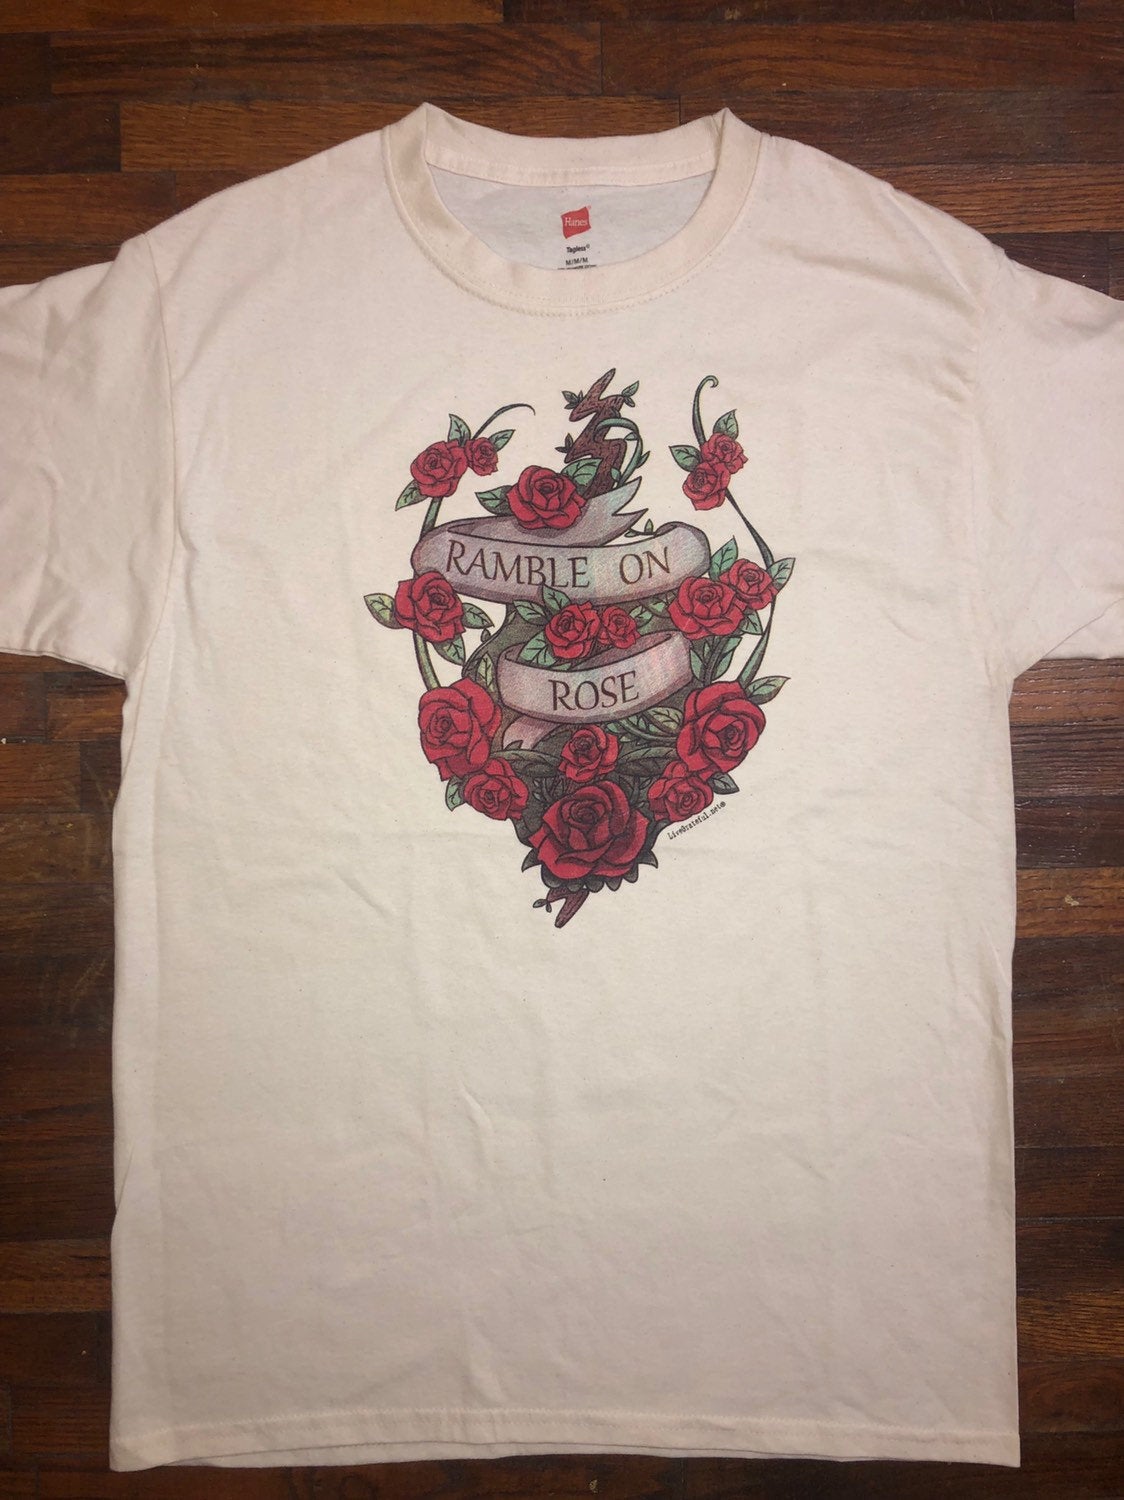 Ramble on Rose Grateful Dead inspired shirt - Shakedown Designs